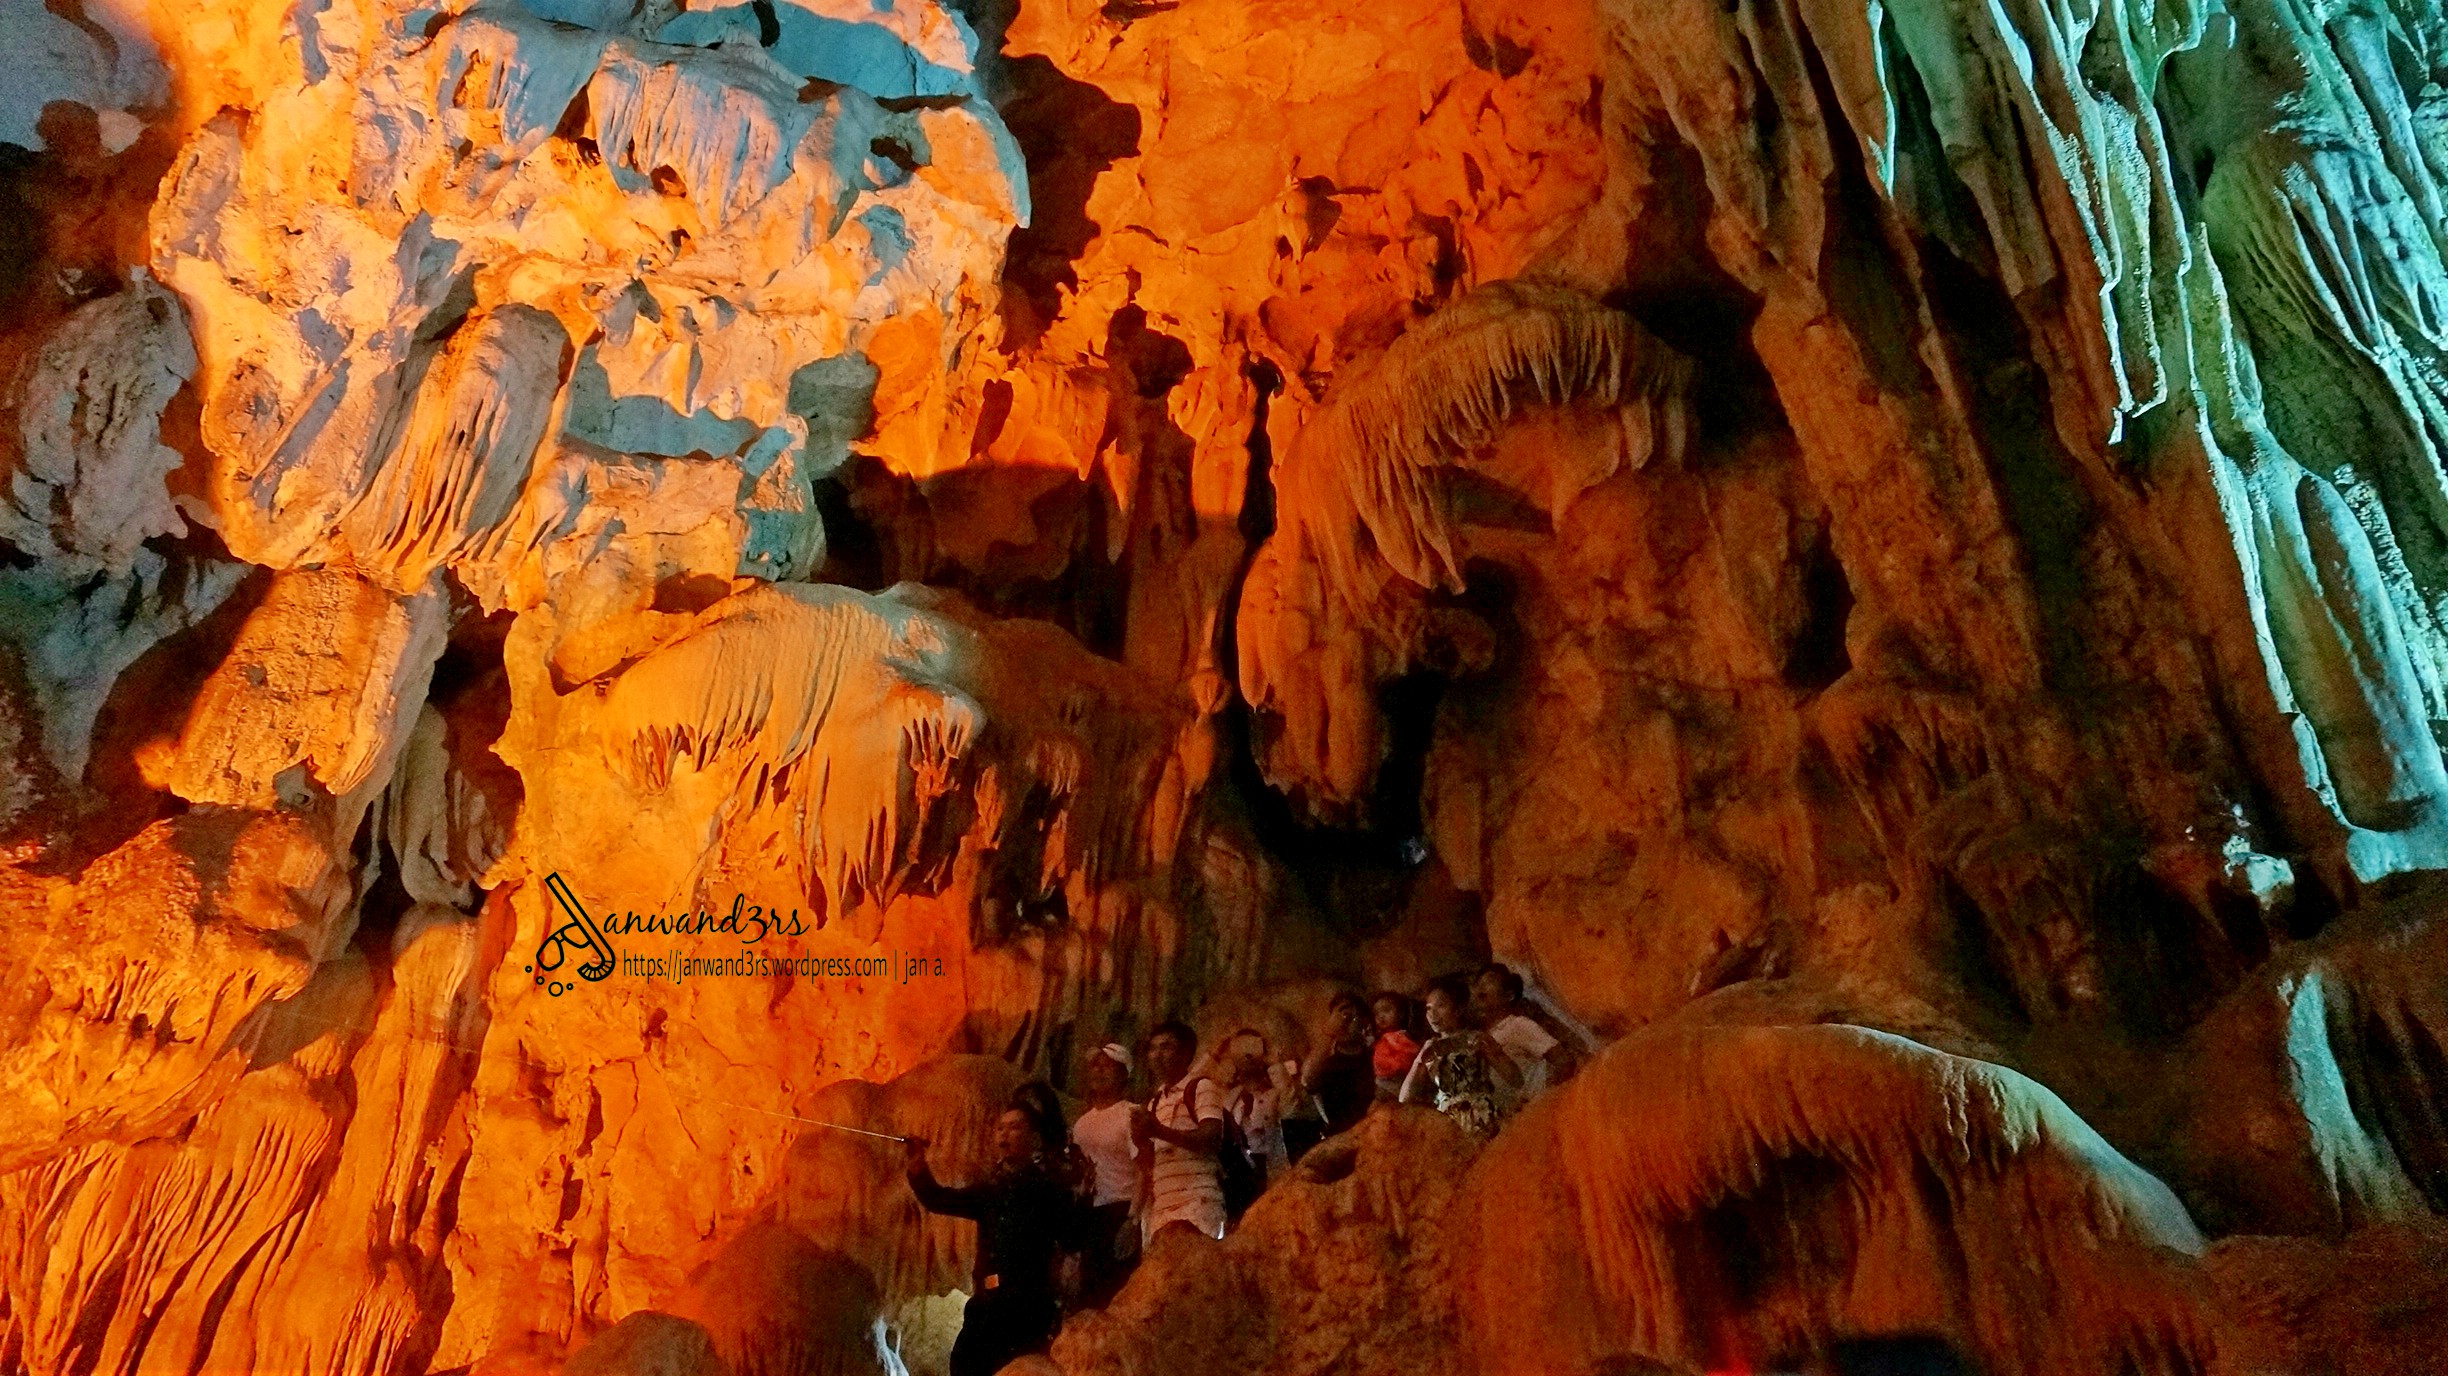 thien-cung-cave-halong-bay-vietnam.jpg